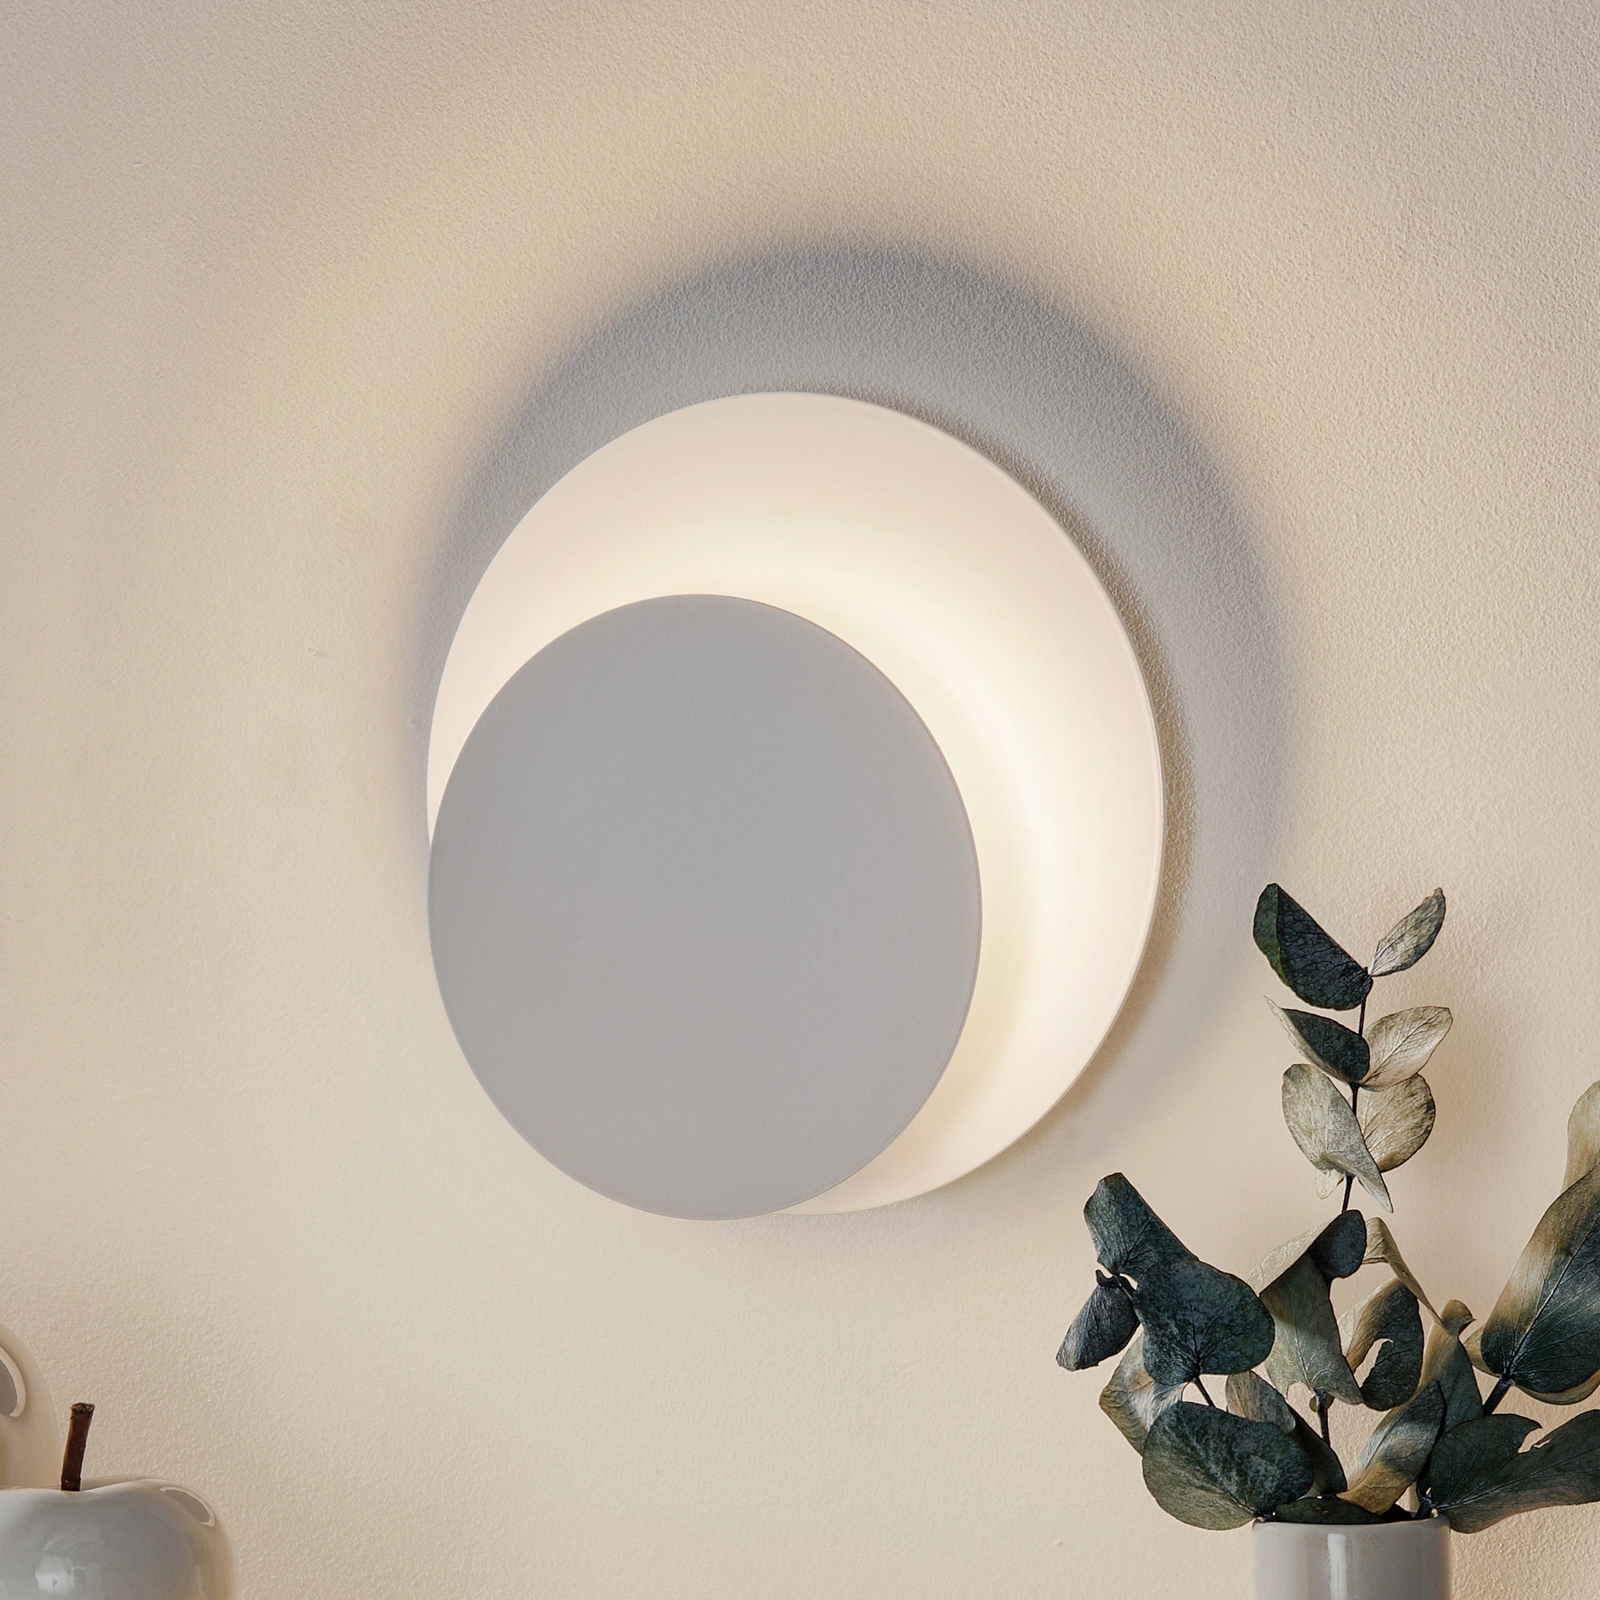 Smerig inval Inademen Wandlamp Circle in ronde vorm, wit | Lampen24.nl